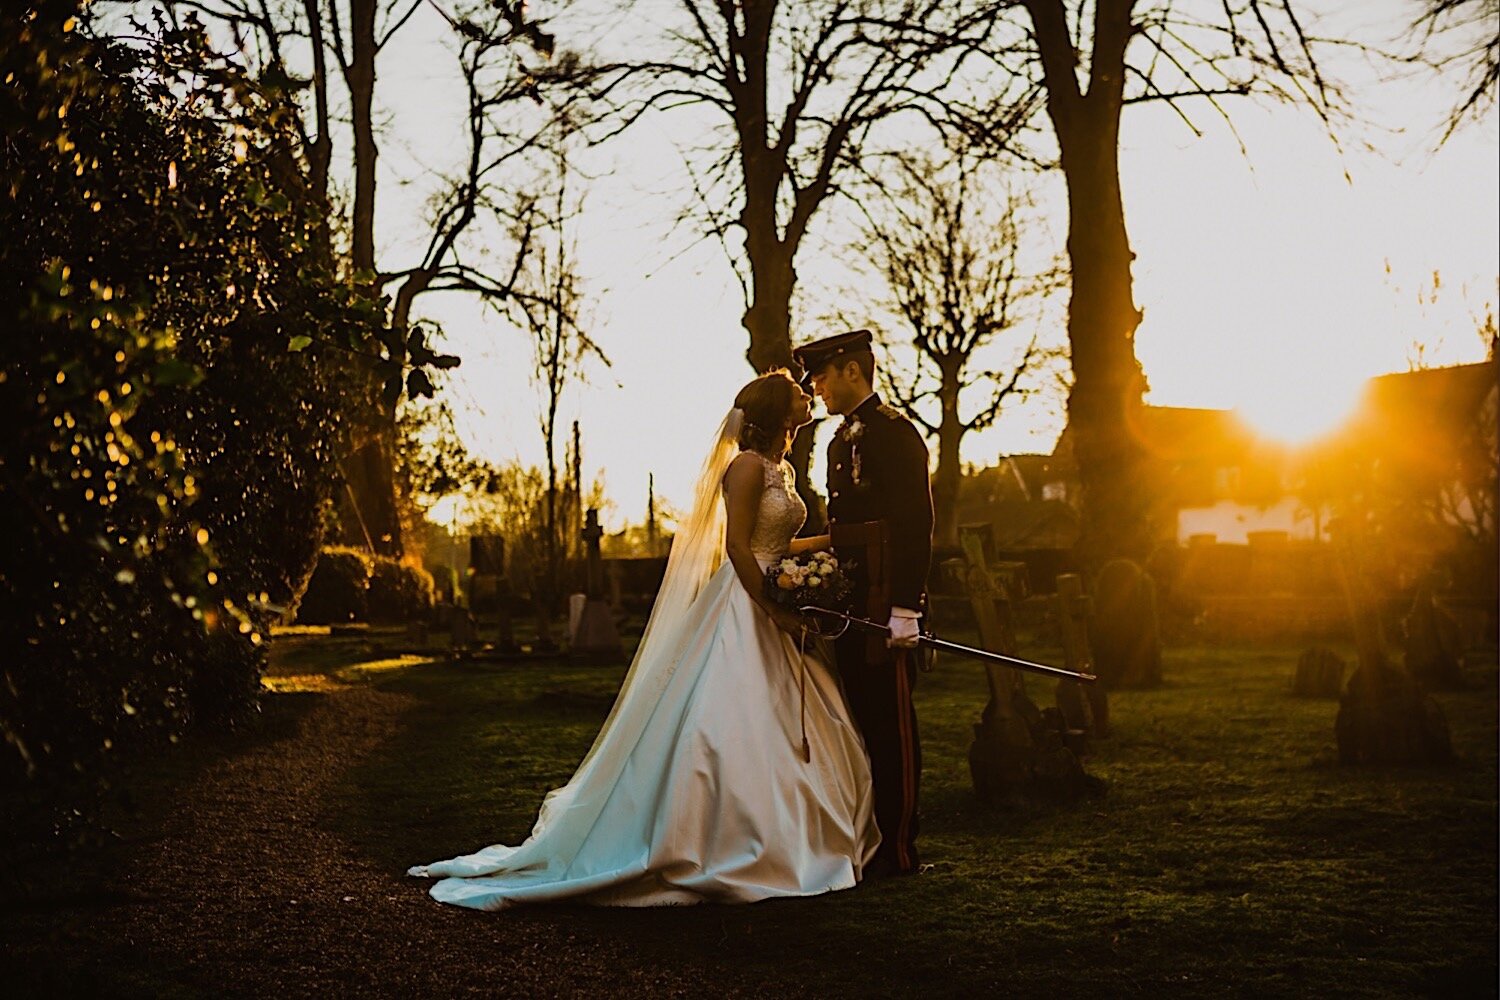 069_TWS-758_bride_church_hour_couple_photography_henley_oxfordshire_millitary_ceremony_sunset_golden_crooked_wedding_portraits_groom_winter_billet.jpg